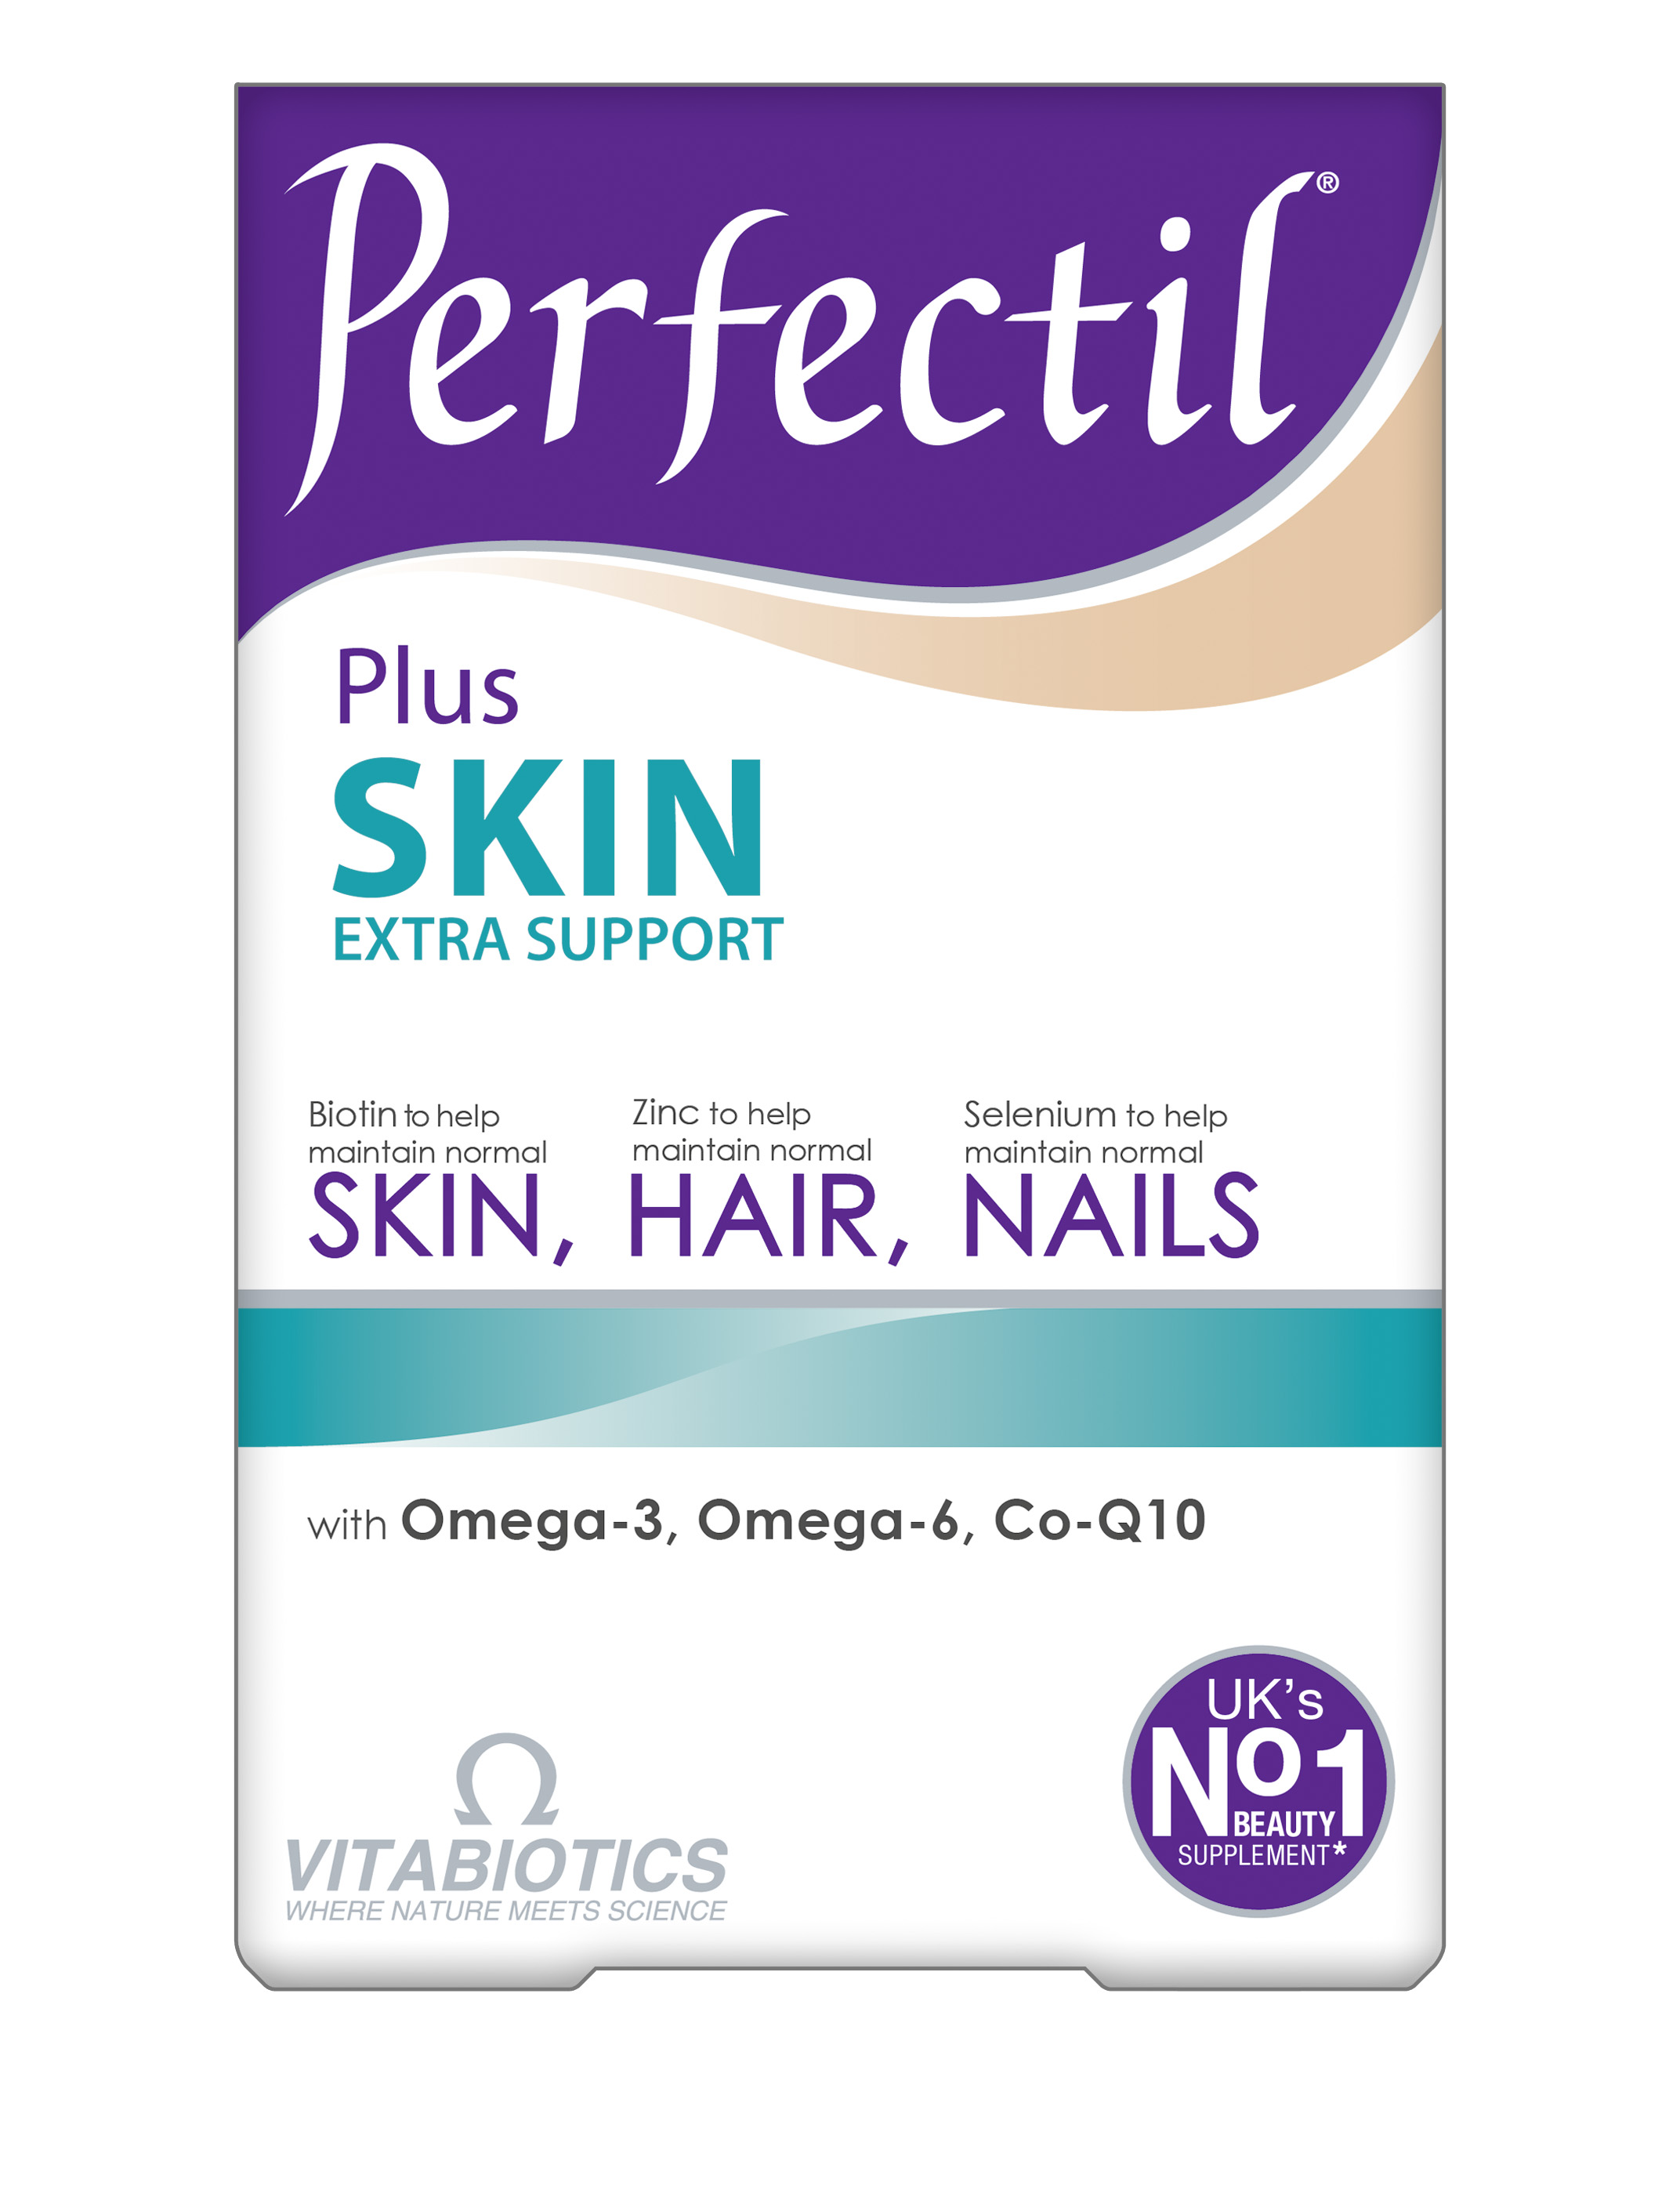 For Incredible Hair Skin And Nails Choose Perfectil FRUK MAGAZINE